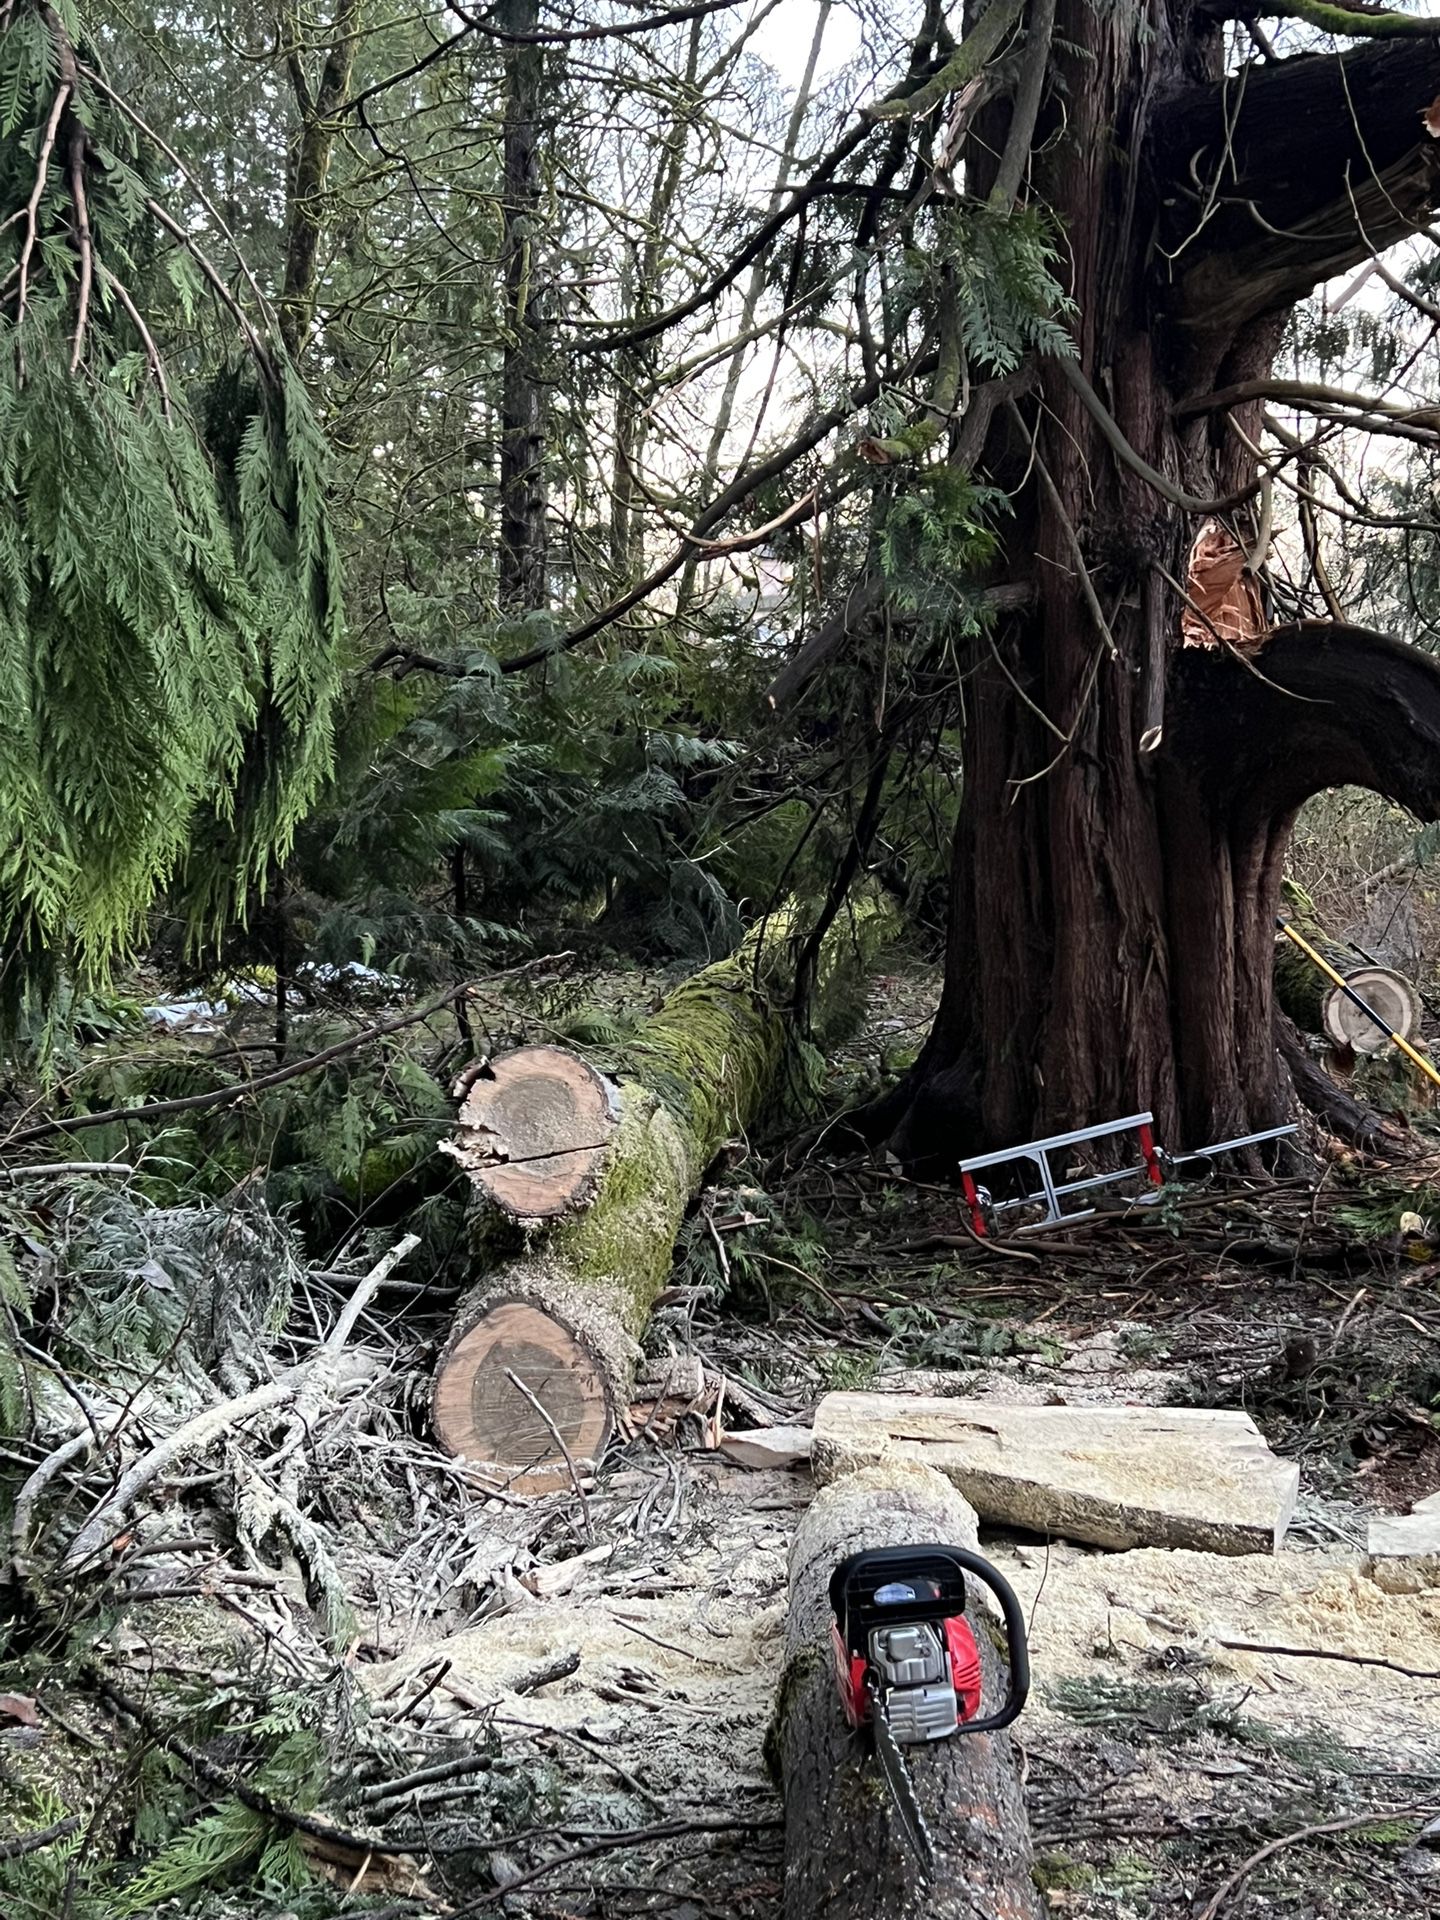 Free Firewood  - Update 12/26